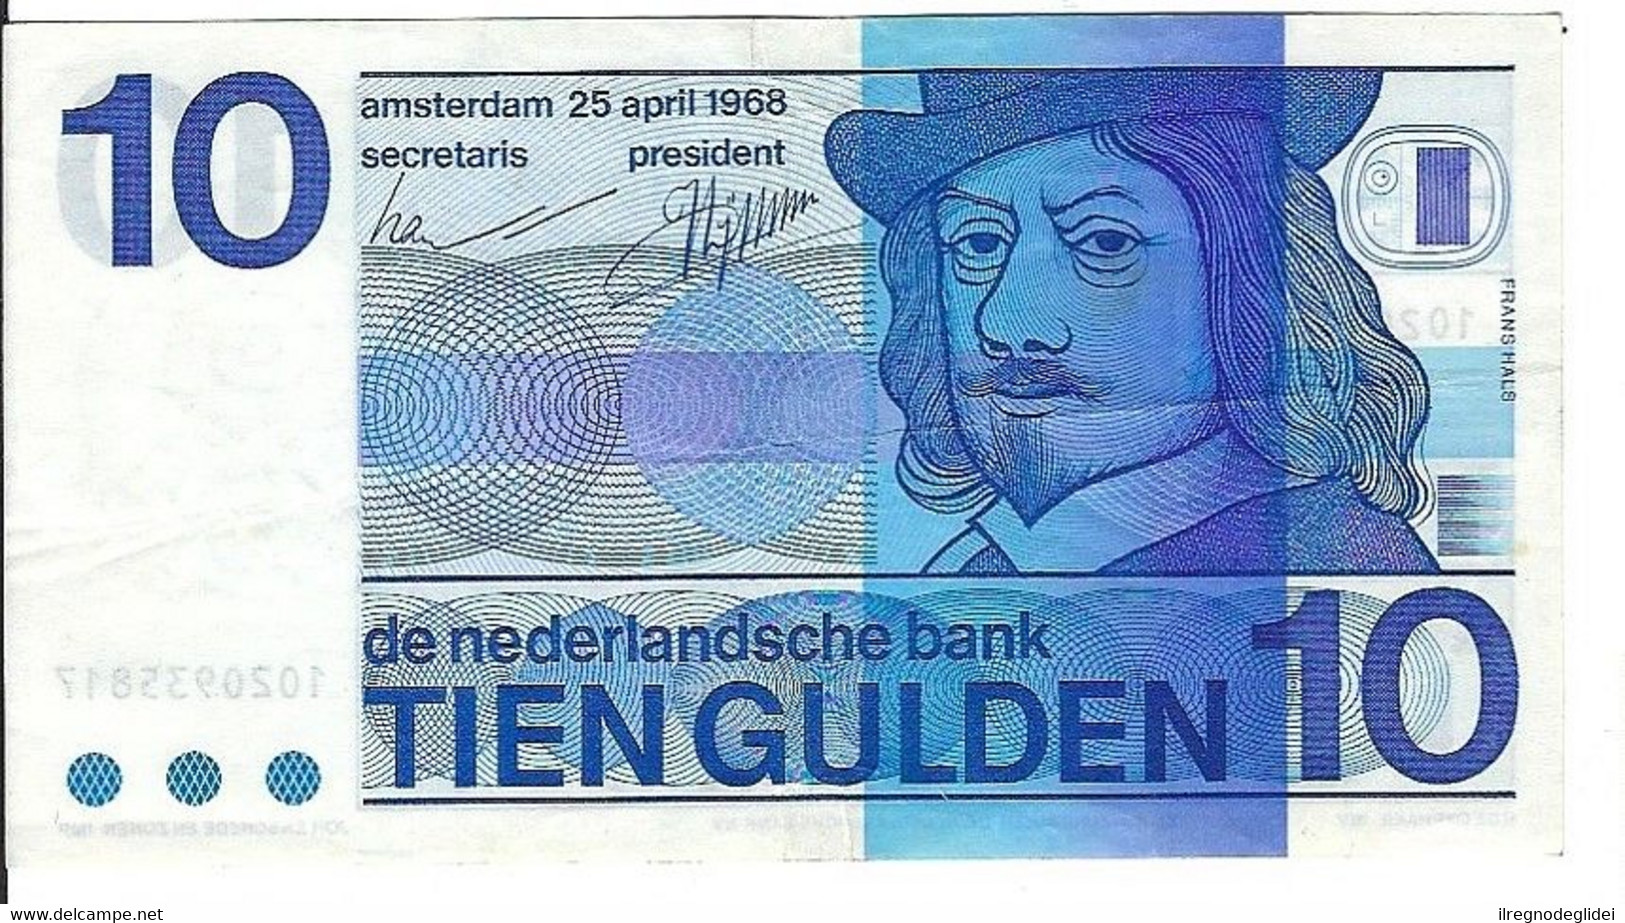 PAESI BASSI - NEDERLAND  - 10 GULDEN - WYSIWYG - N° SERIALE 1020935817 - CARTAMONETA - PAPER MONEY - 10 Gulden